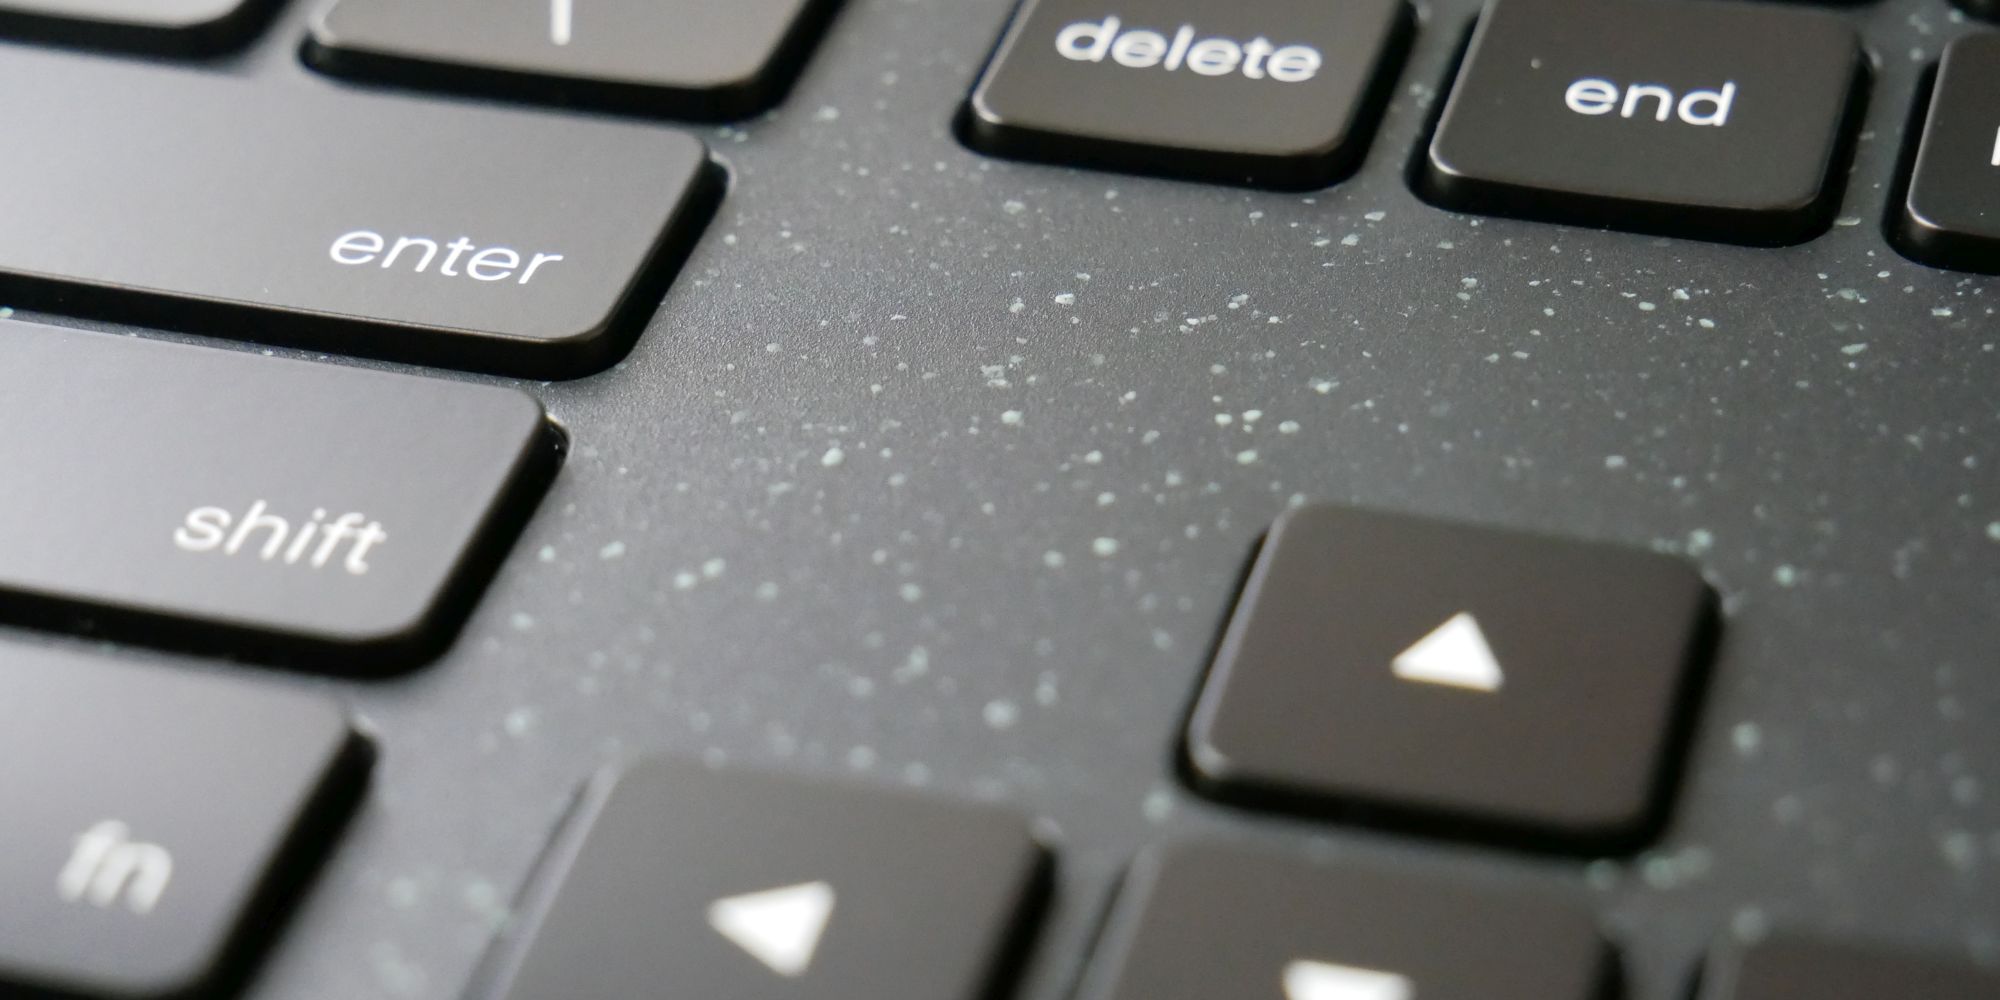 Targus EcoSmart Keyboard Focus on Material